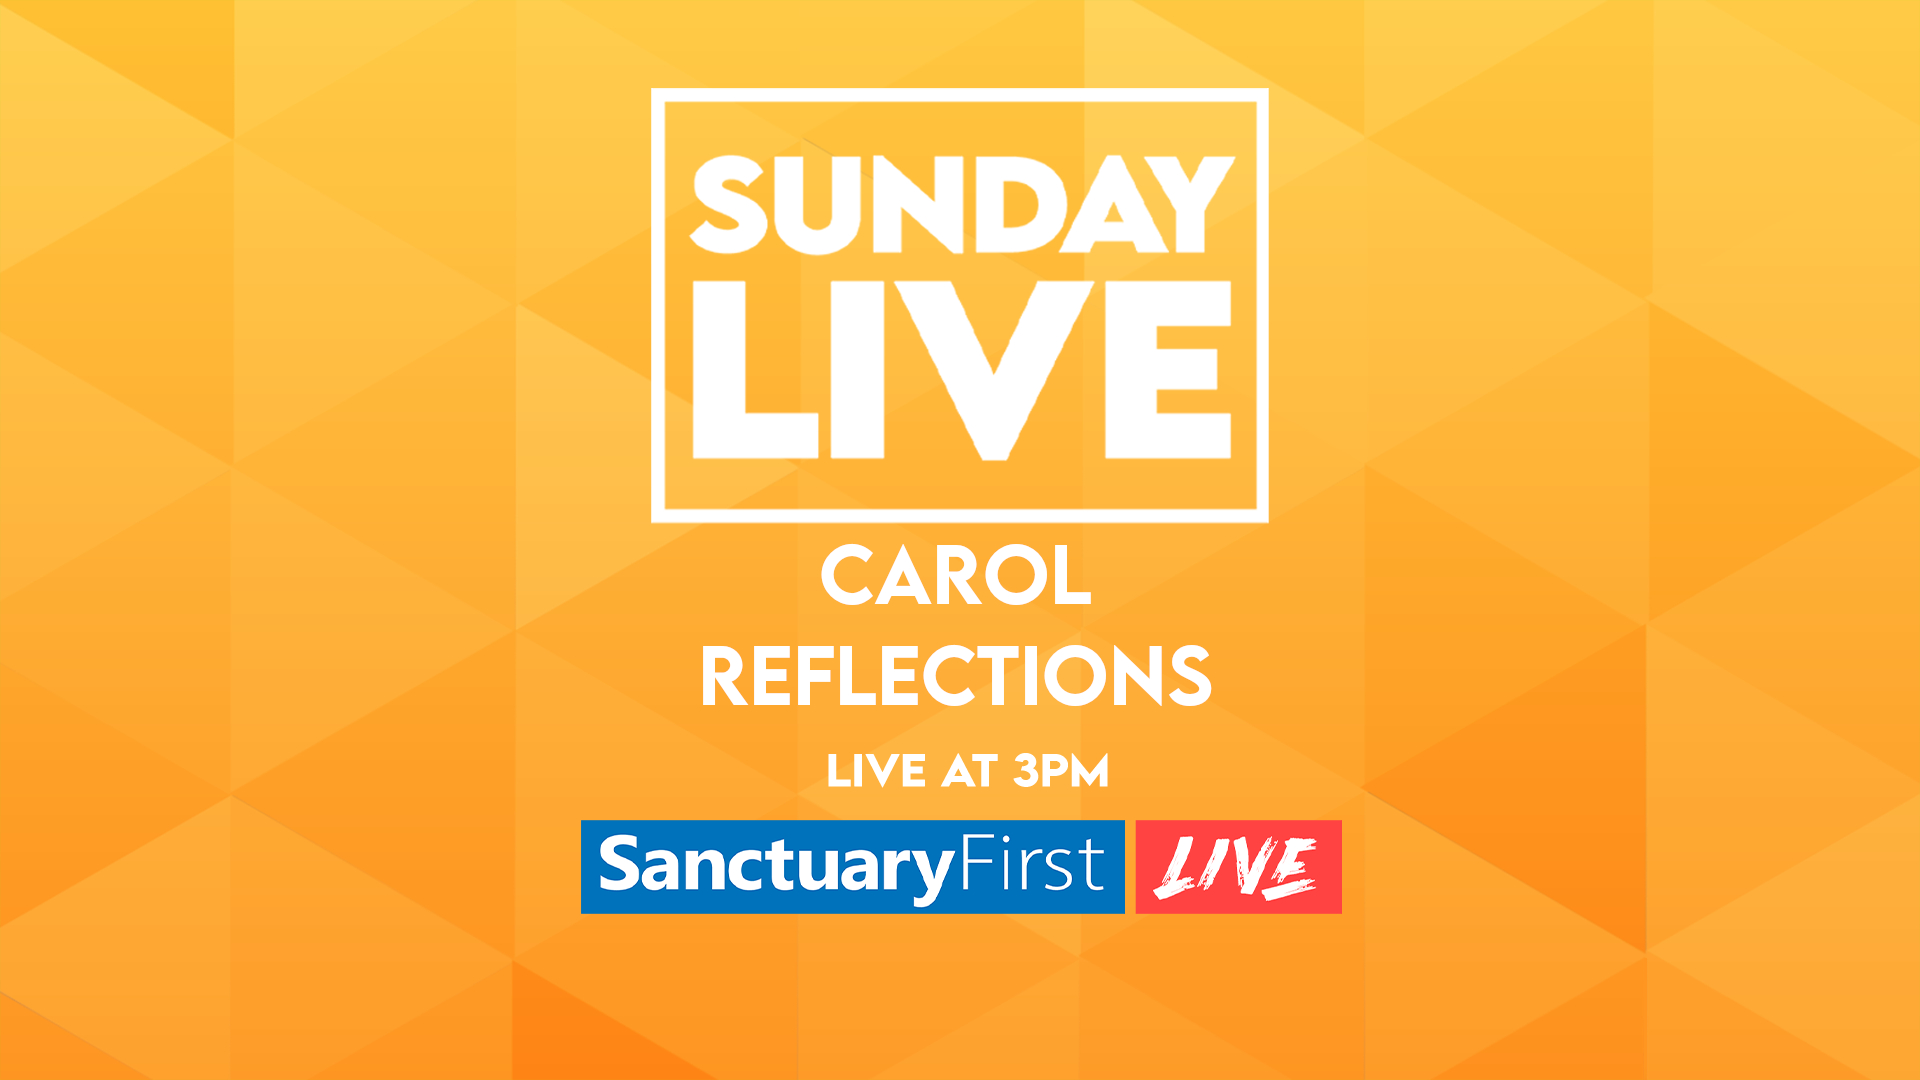 Sunday Live Carol Reflections